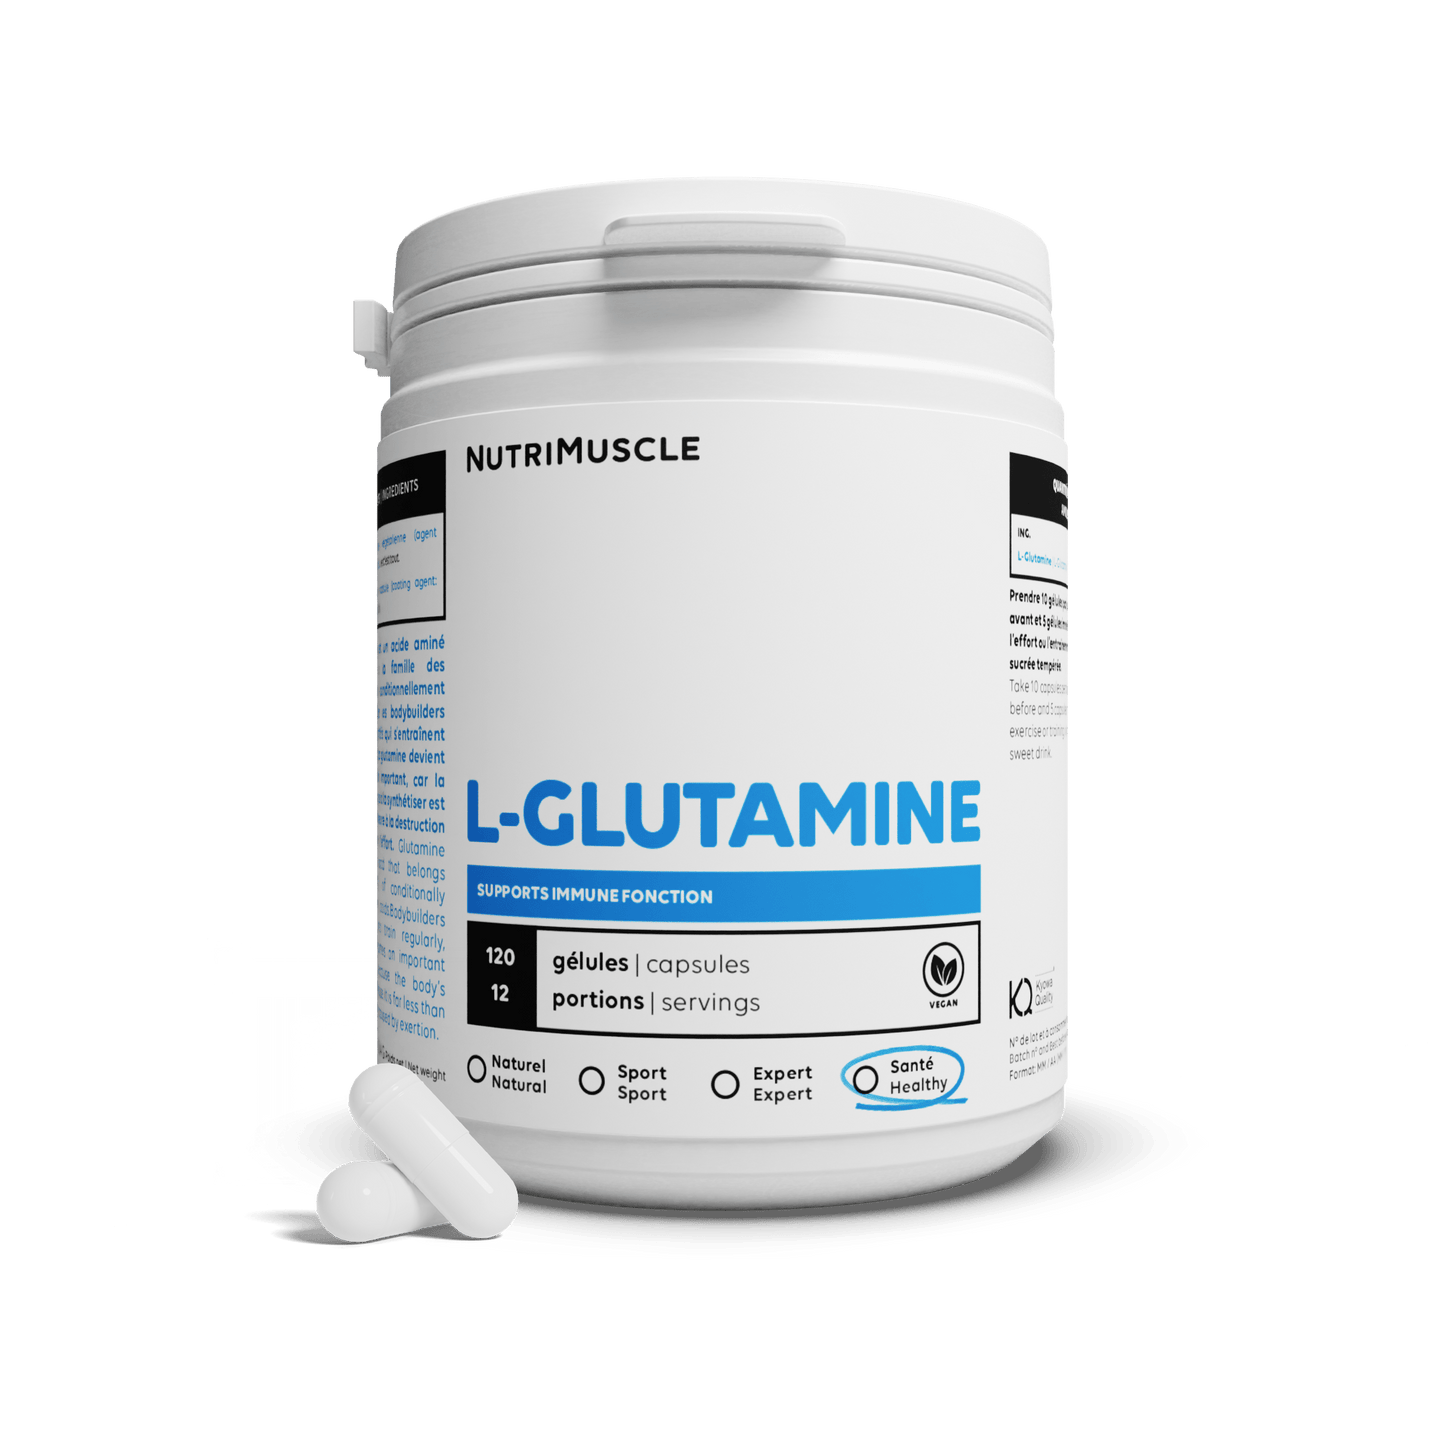 Nutrimuscle Acides aminés 120 gélules Glutamine (L-Glutamine) en gélules